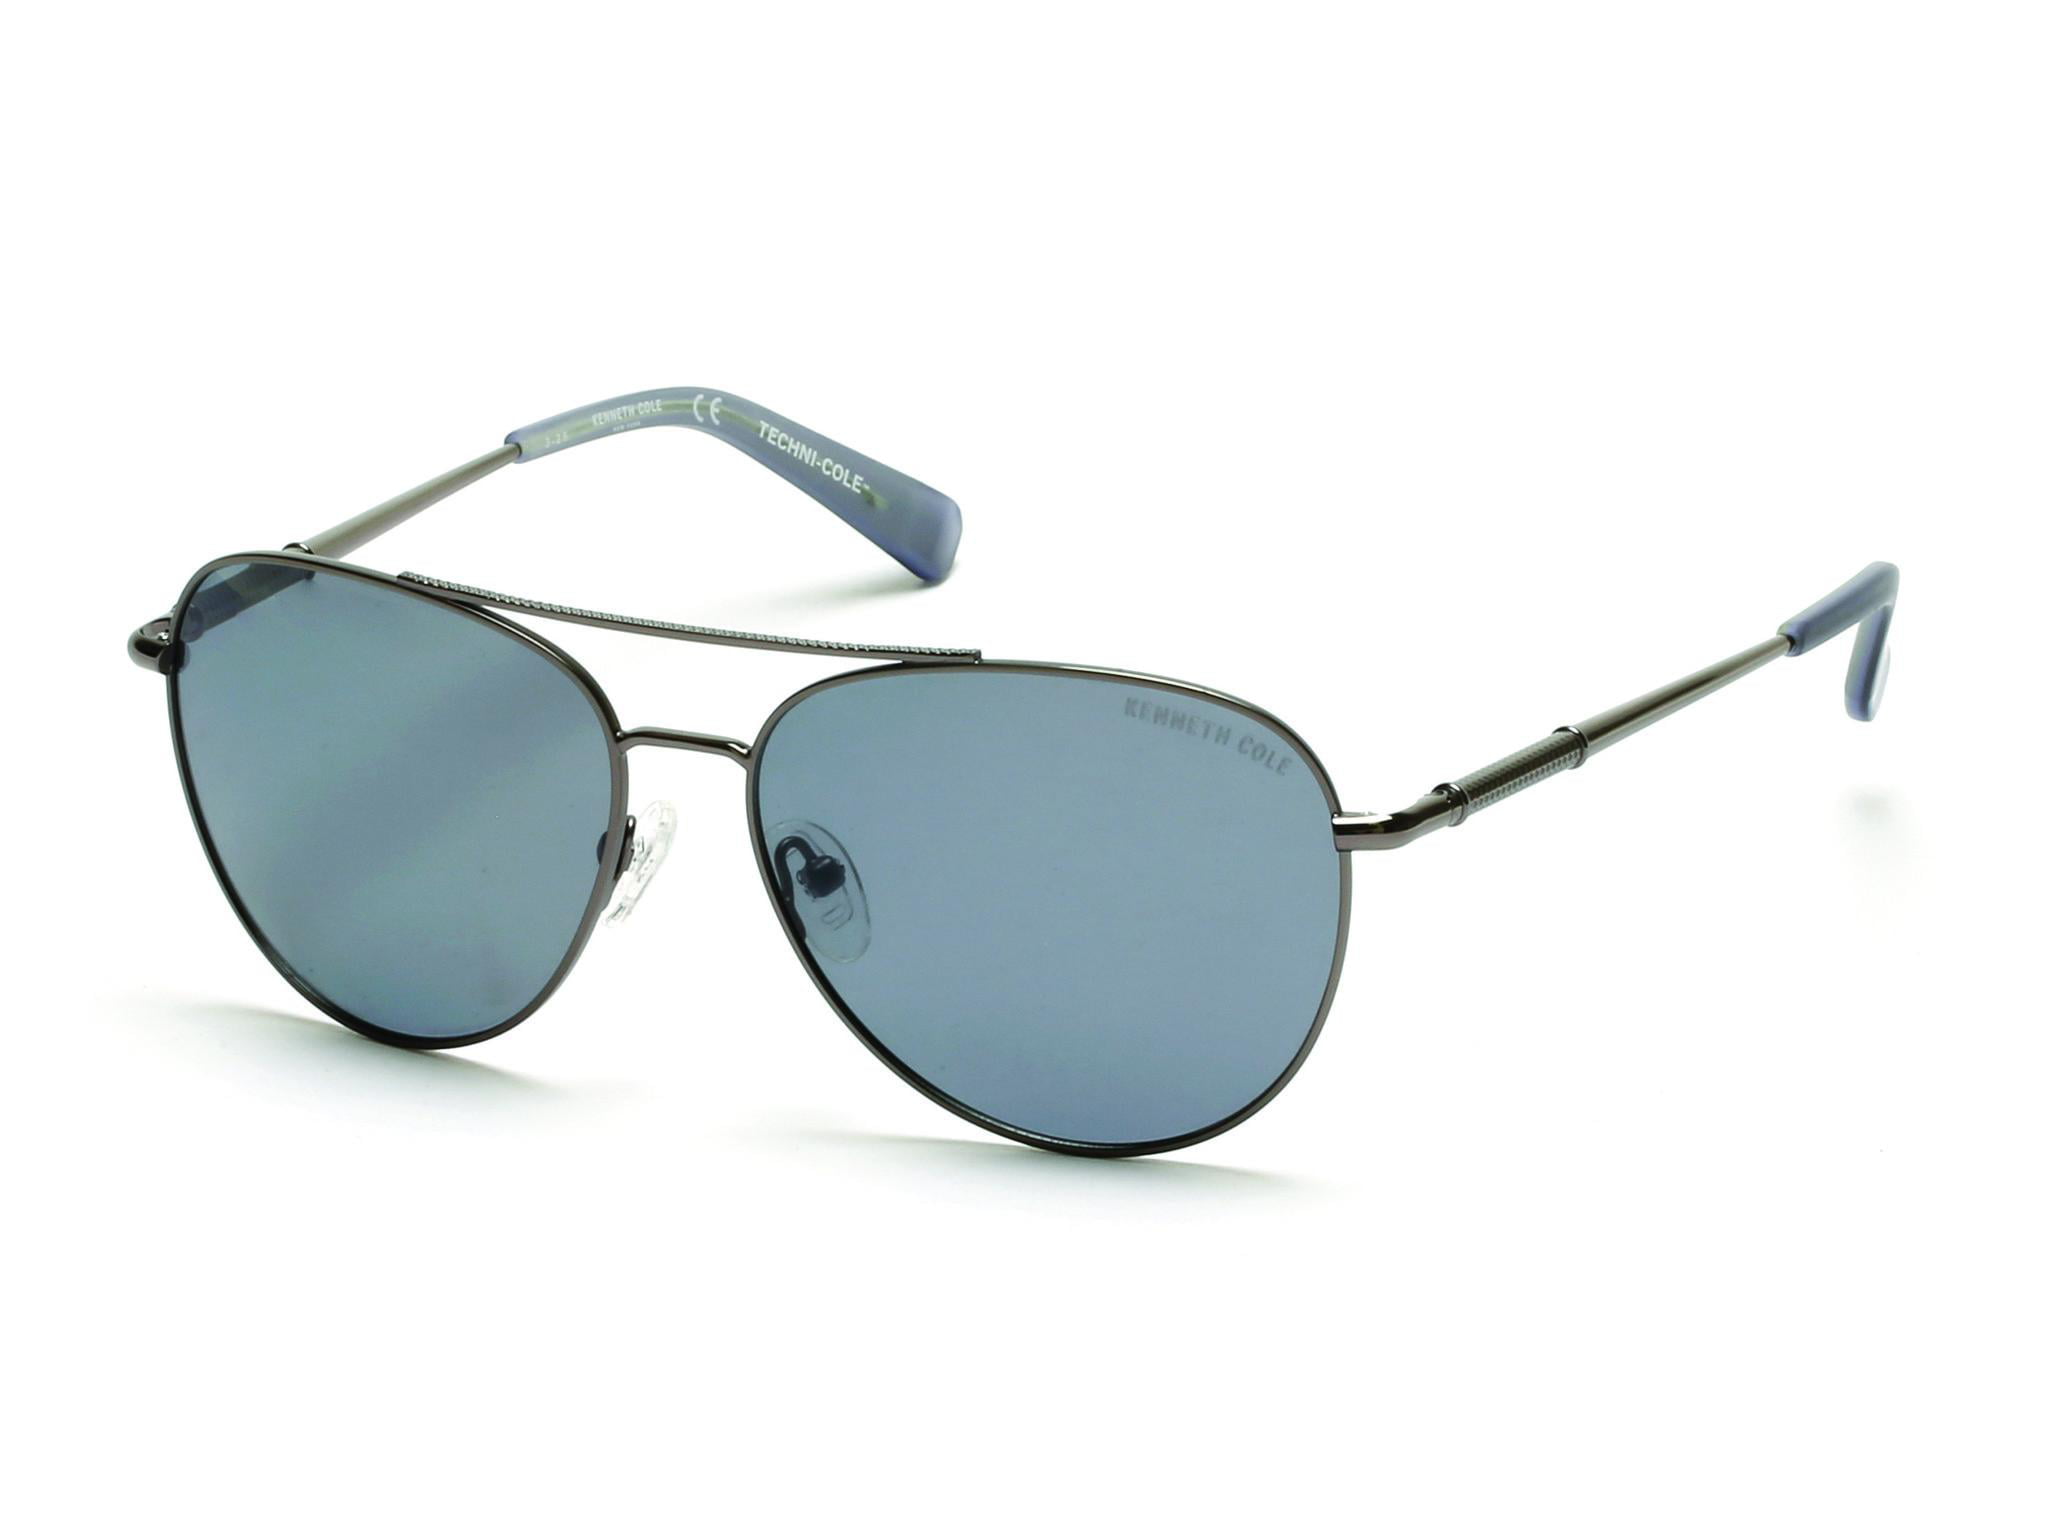 Sunglasses Kenneth Cole New York KC 7212 08D shiny gumetal smoke polarized